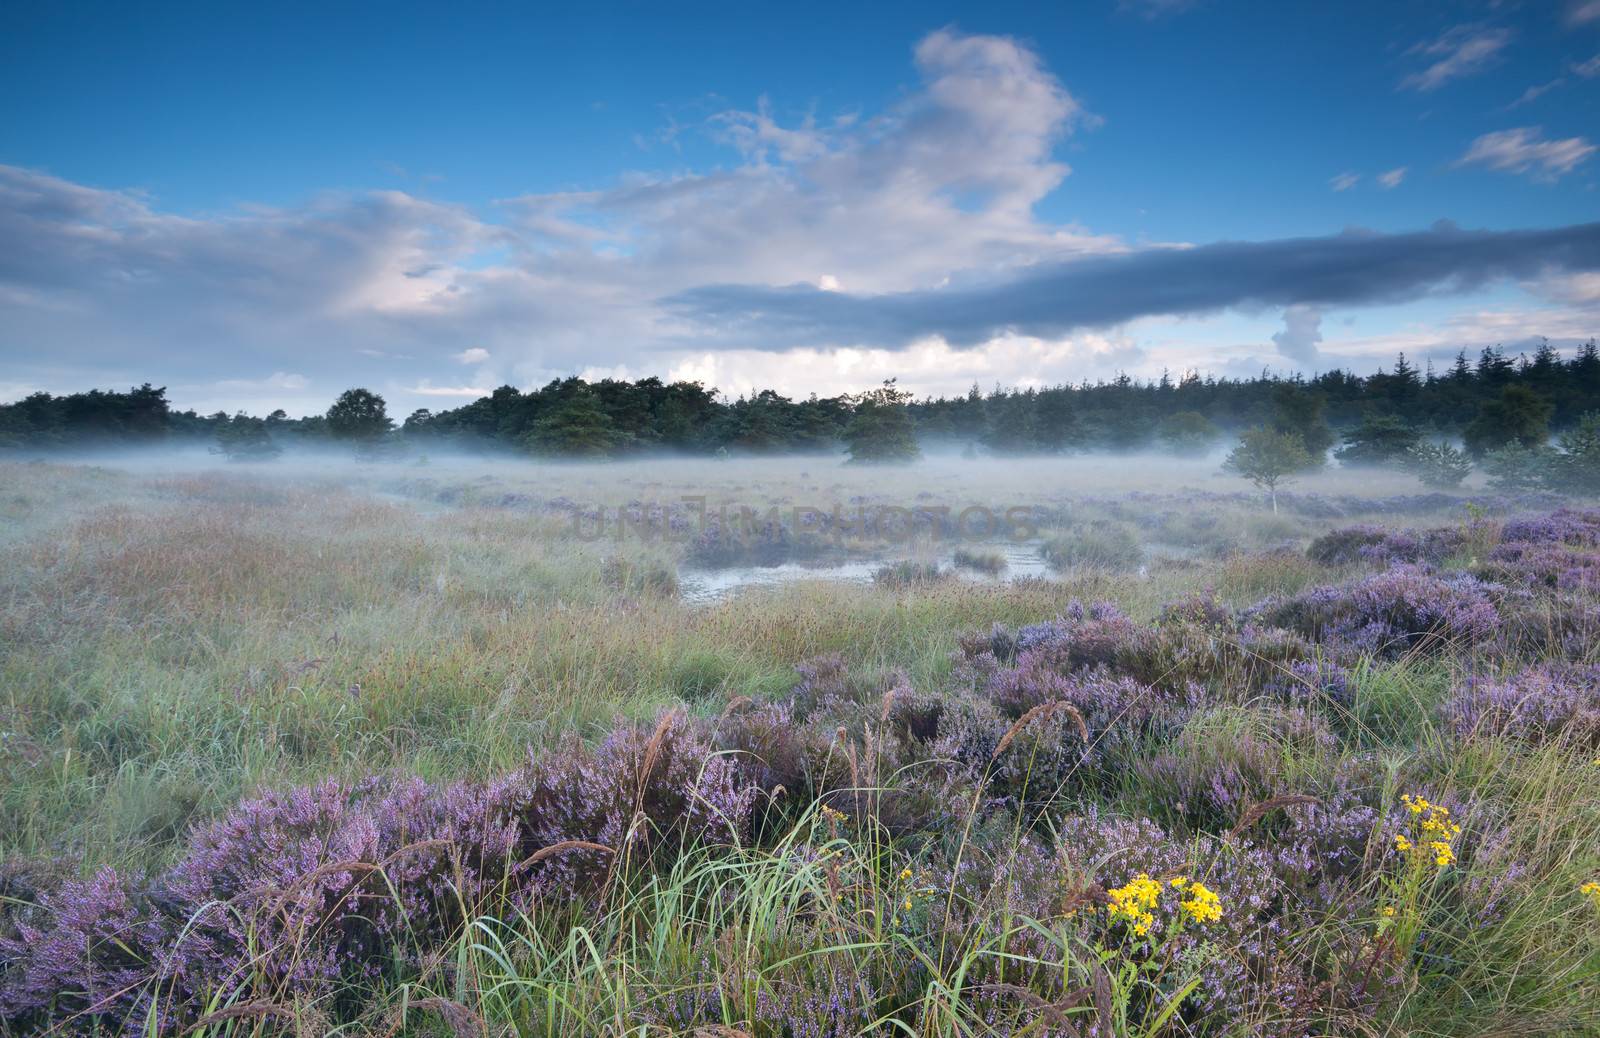 swamp and flowering heather in misty morning, Fochteloerveen, Netherlands